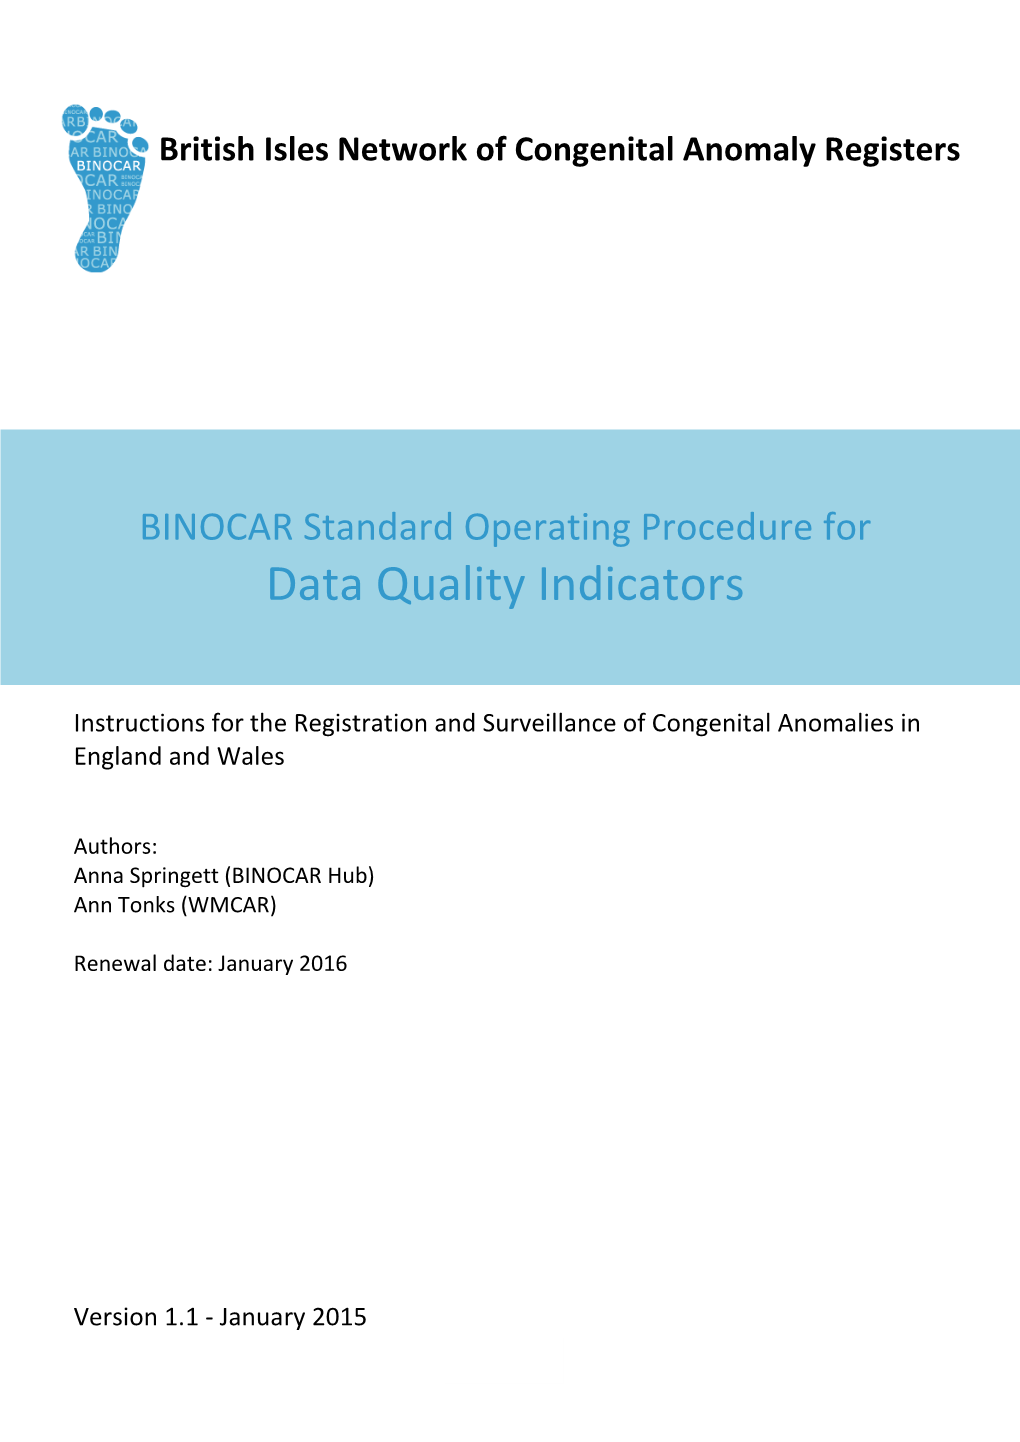 Data Quality Indicators Version 1.1 - January 2015